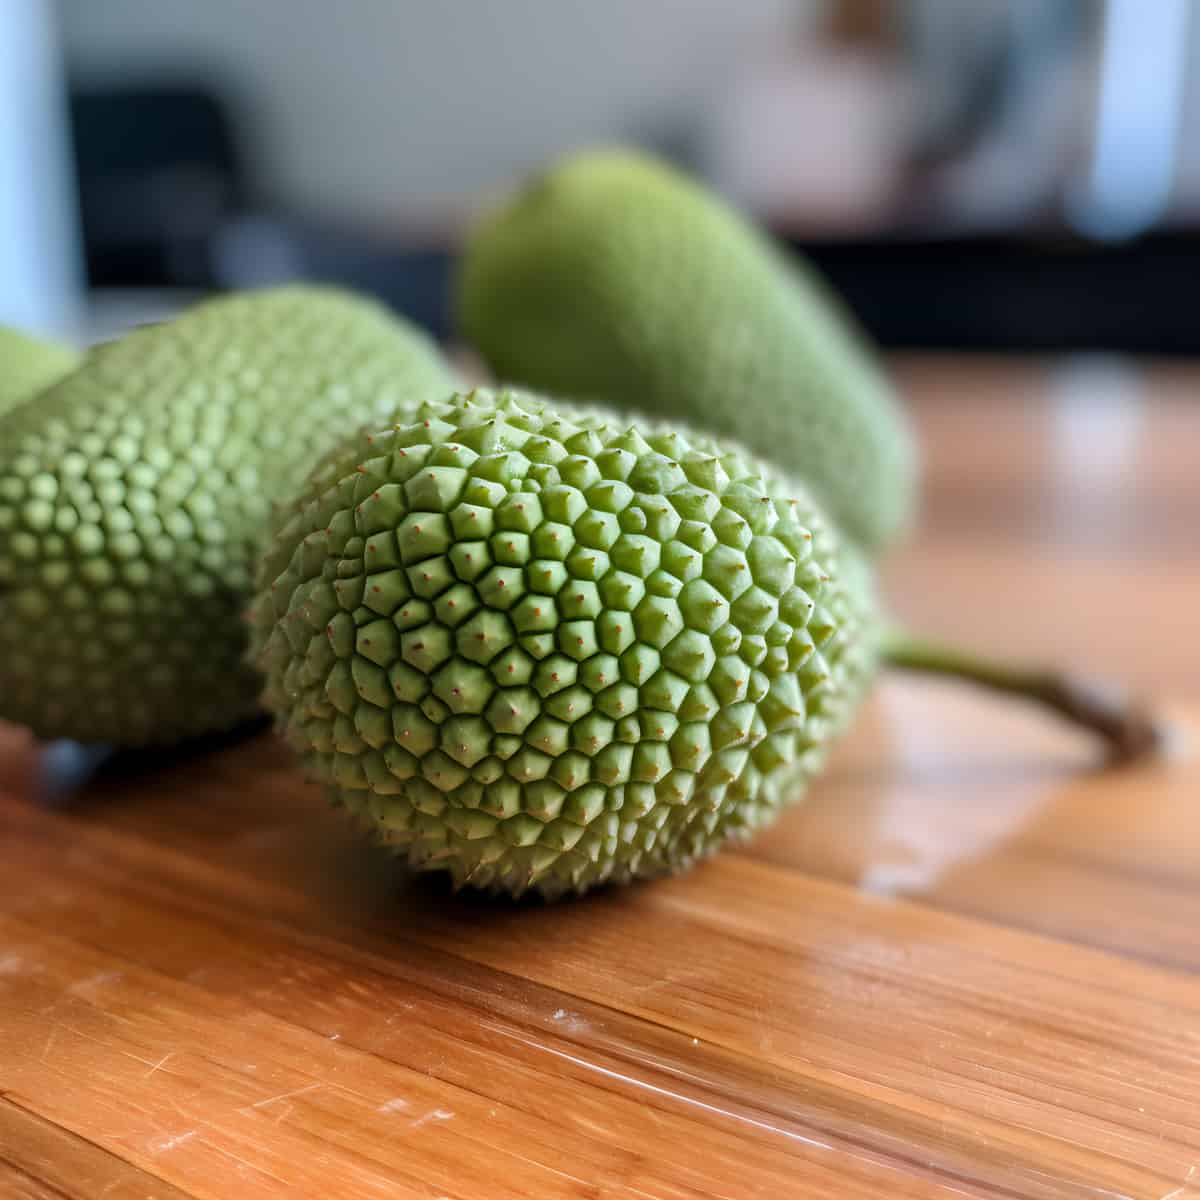 Atemoya Fruit on a kitchen counter